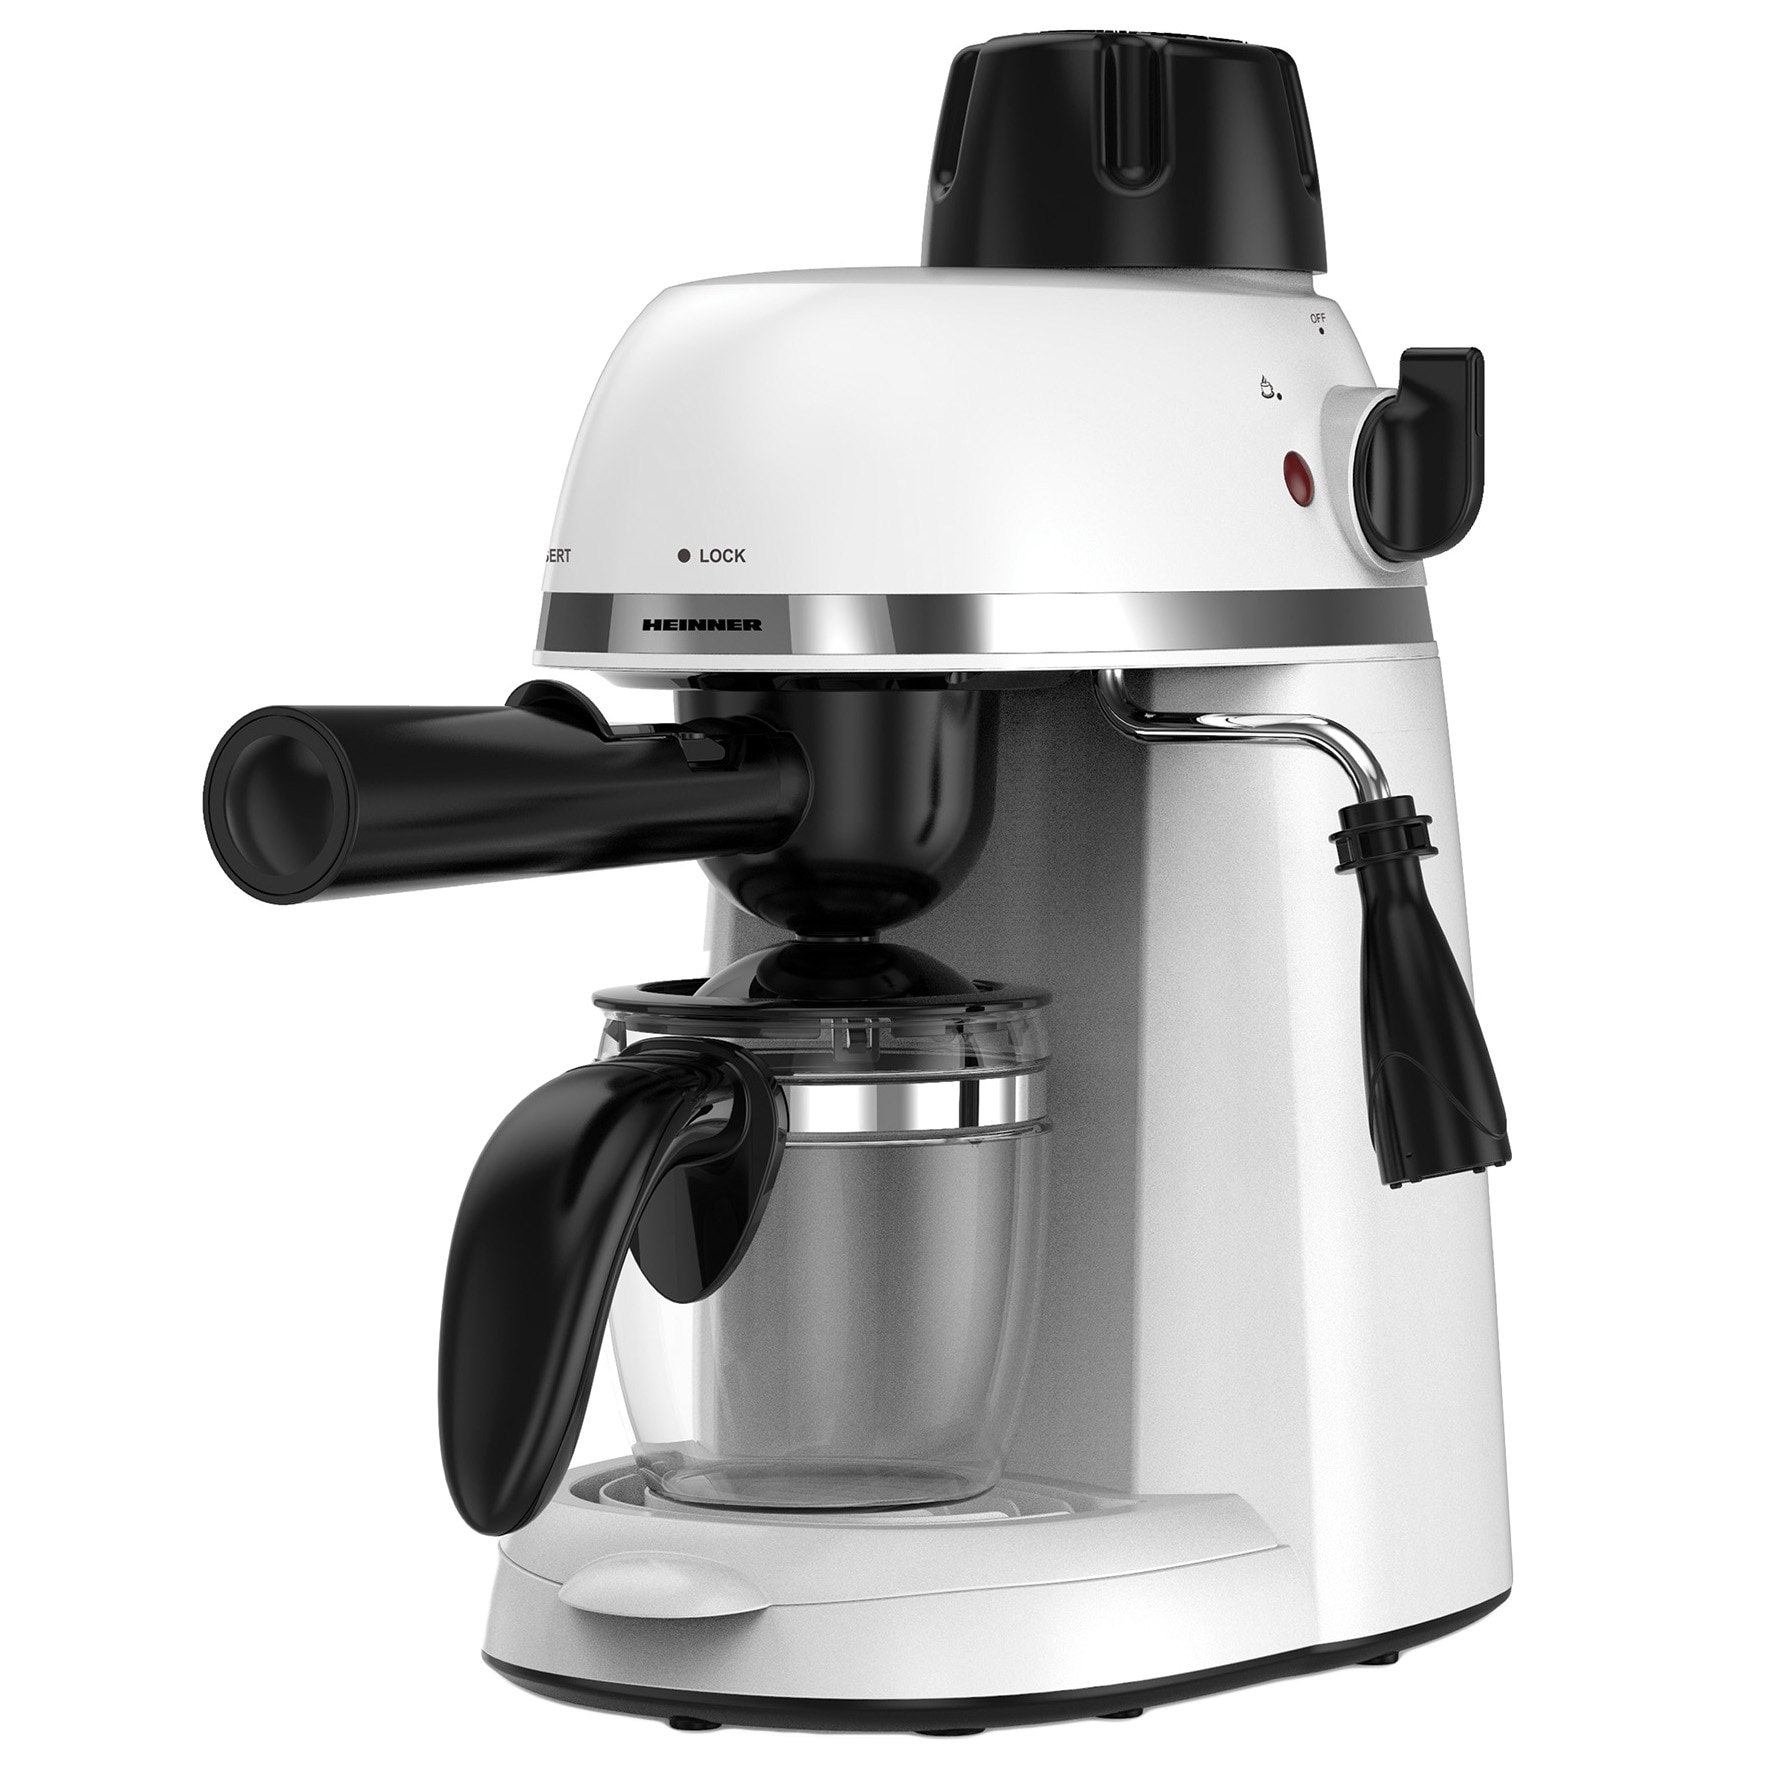 Fotografie Espressor manual Heinner Kopy 350WH HEM-350WH, 800W, 3.5 bar, capacitate rezervor 0.24l, optiuni preparare: espresso si cappuccino, Alb